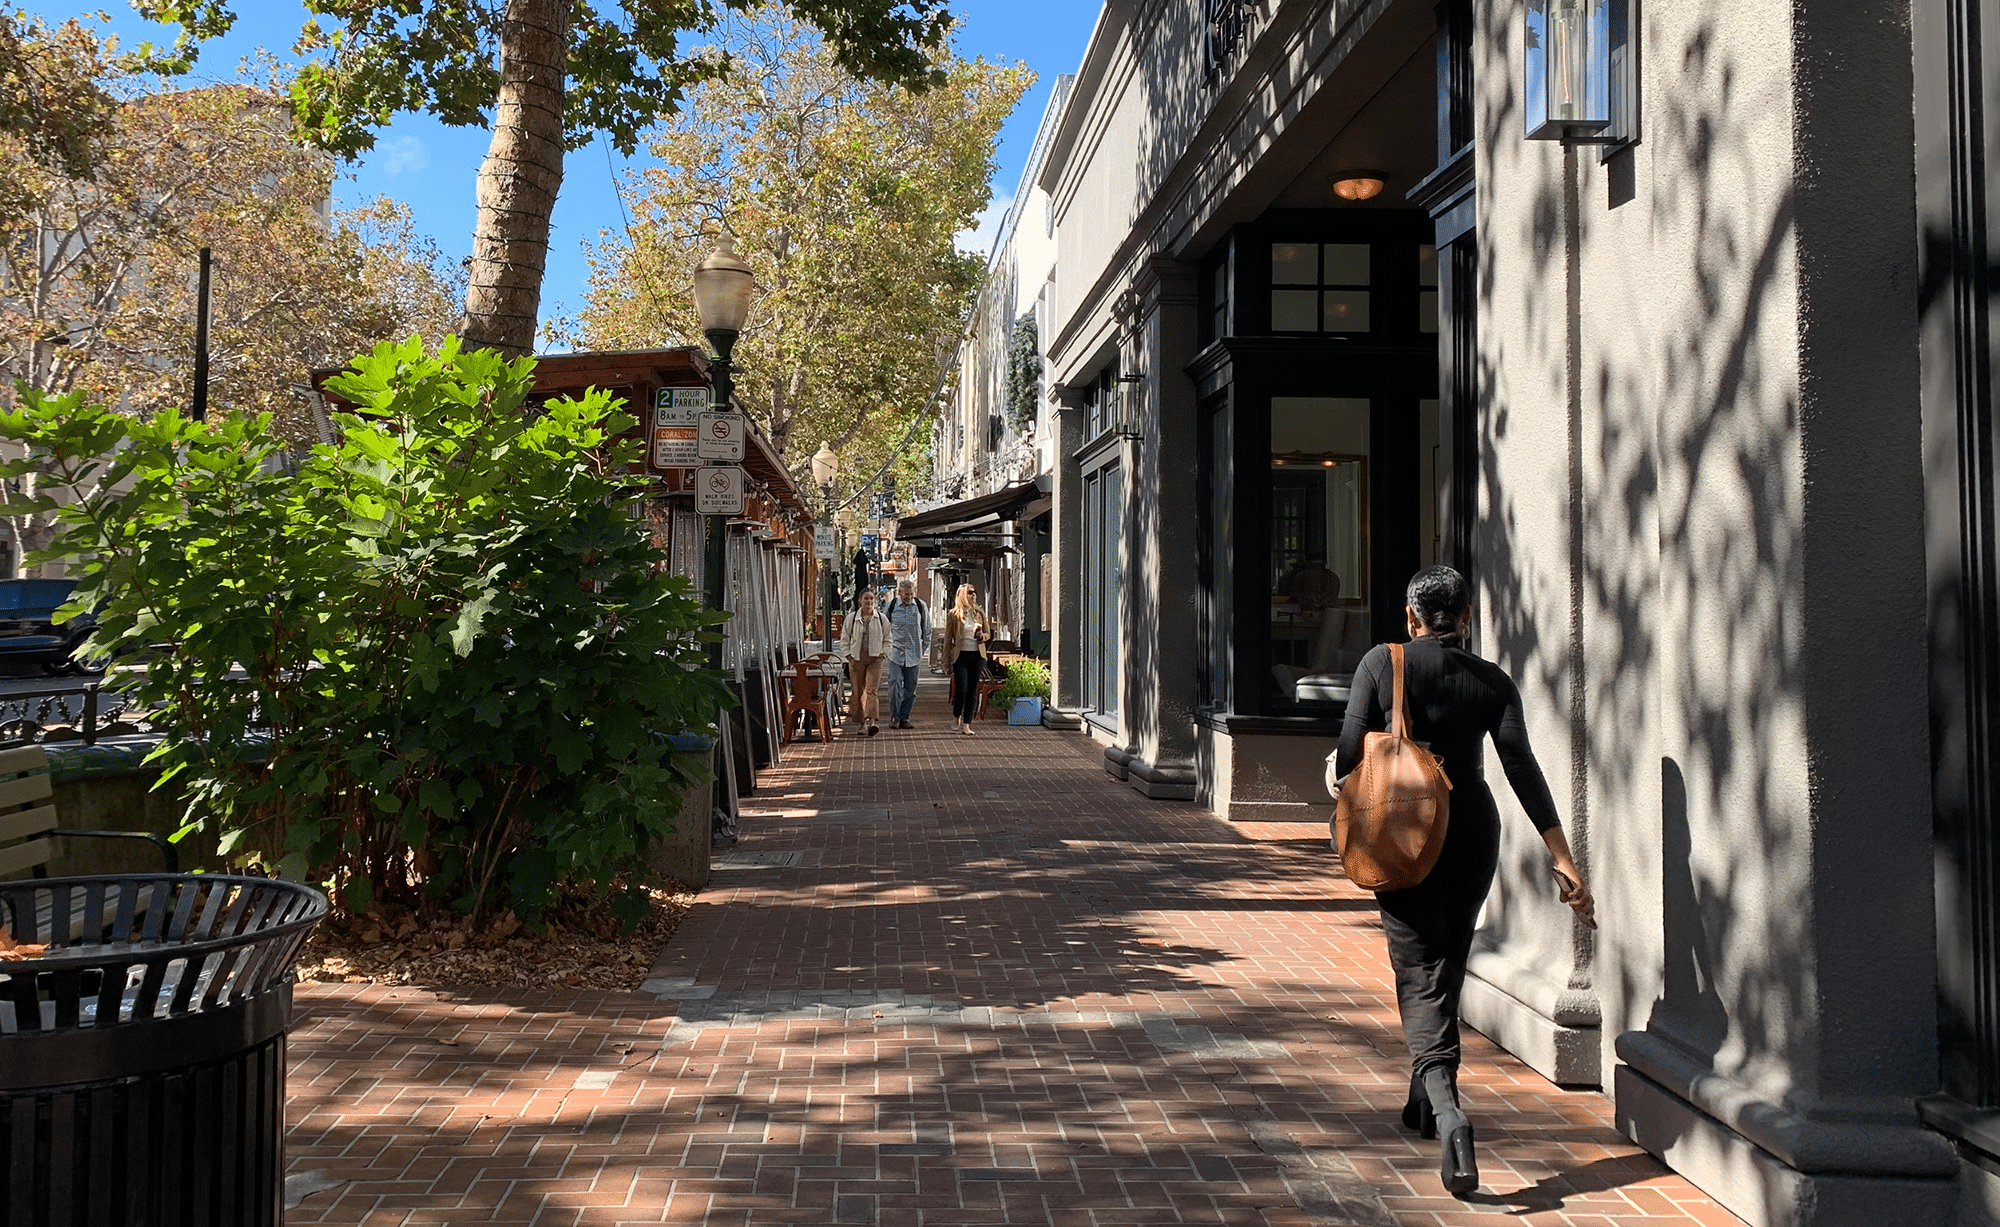 Downtown Palo Alto Office/Retail/Palo Alto, California